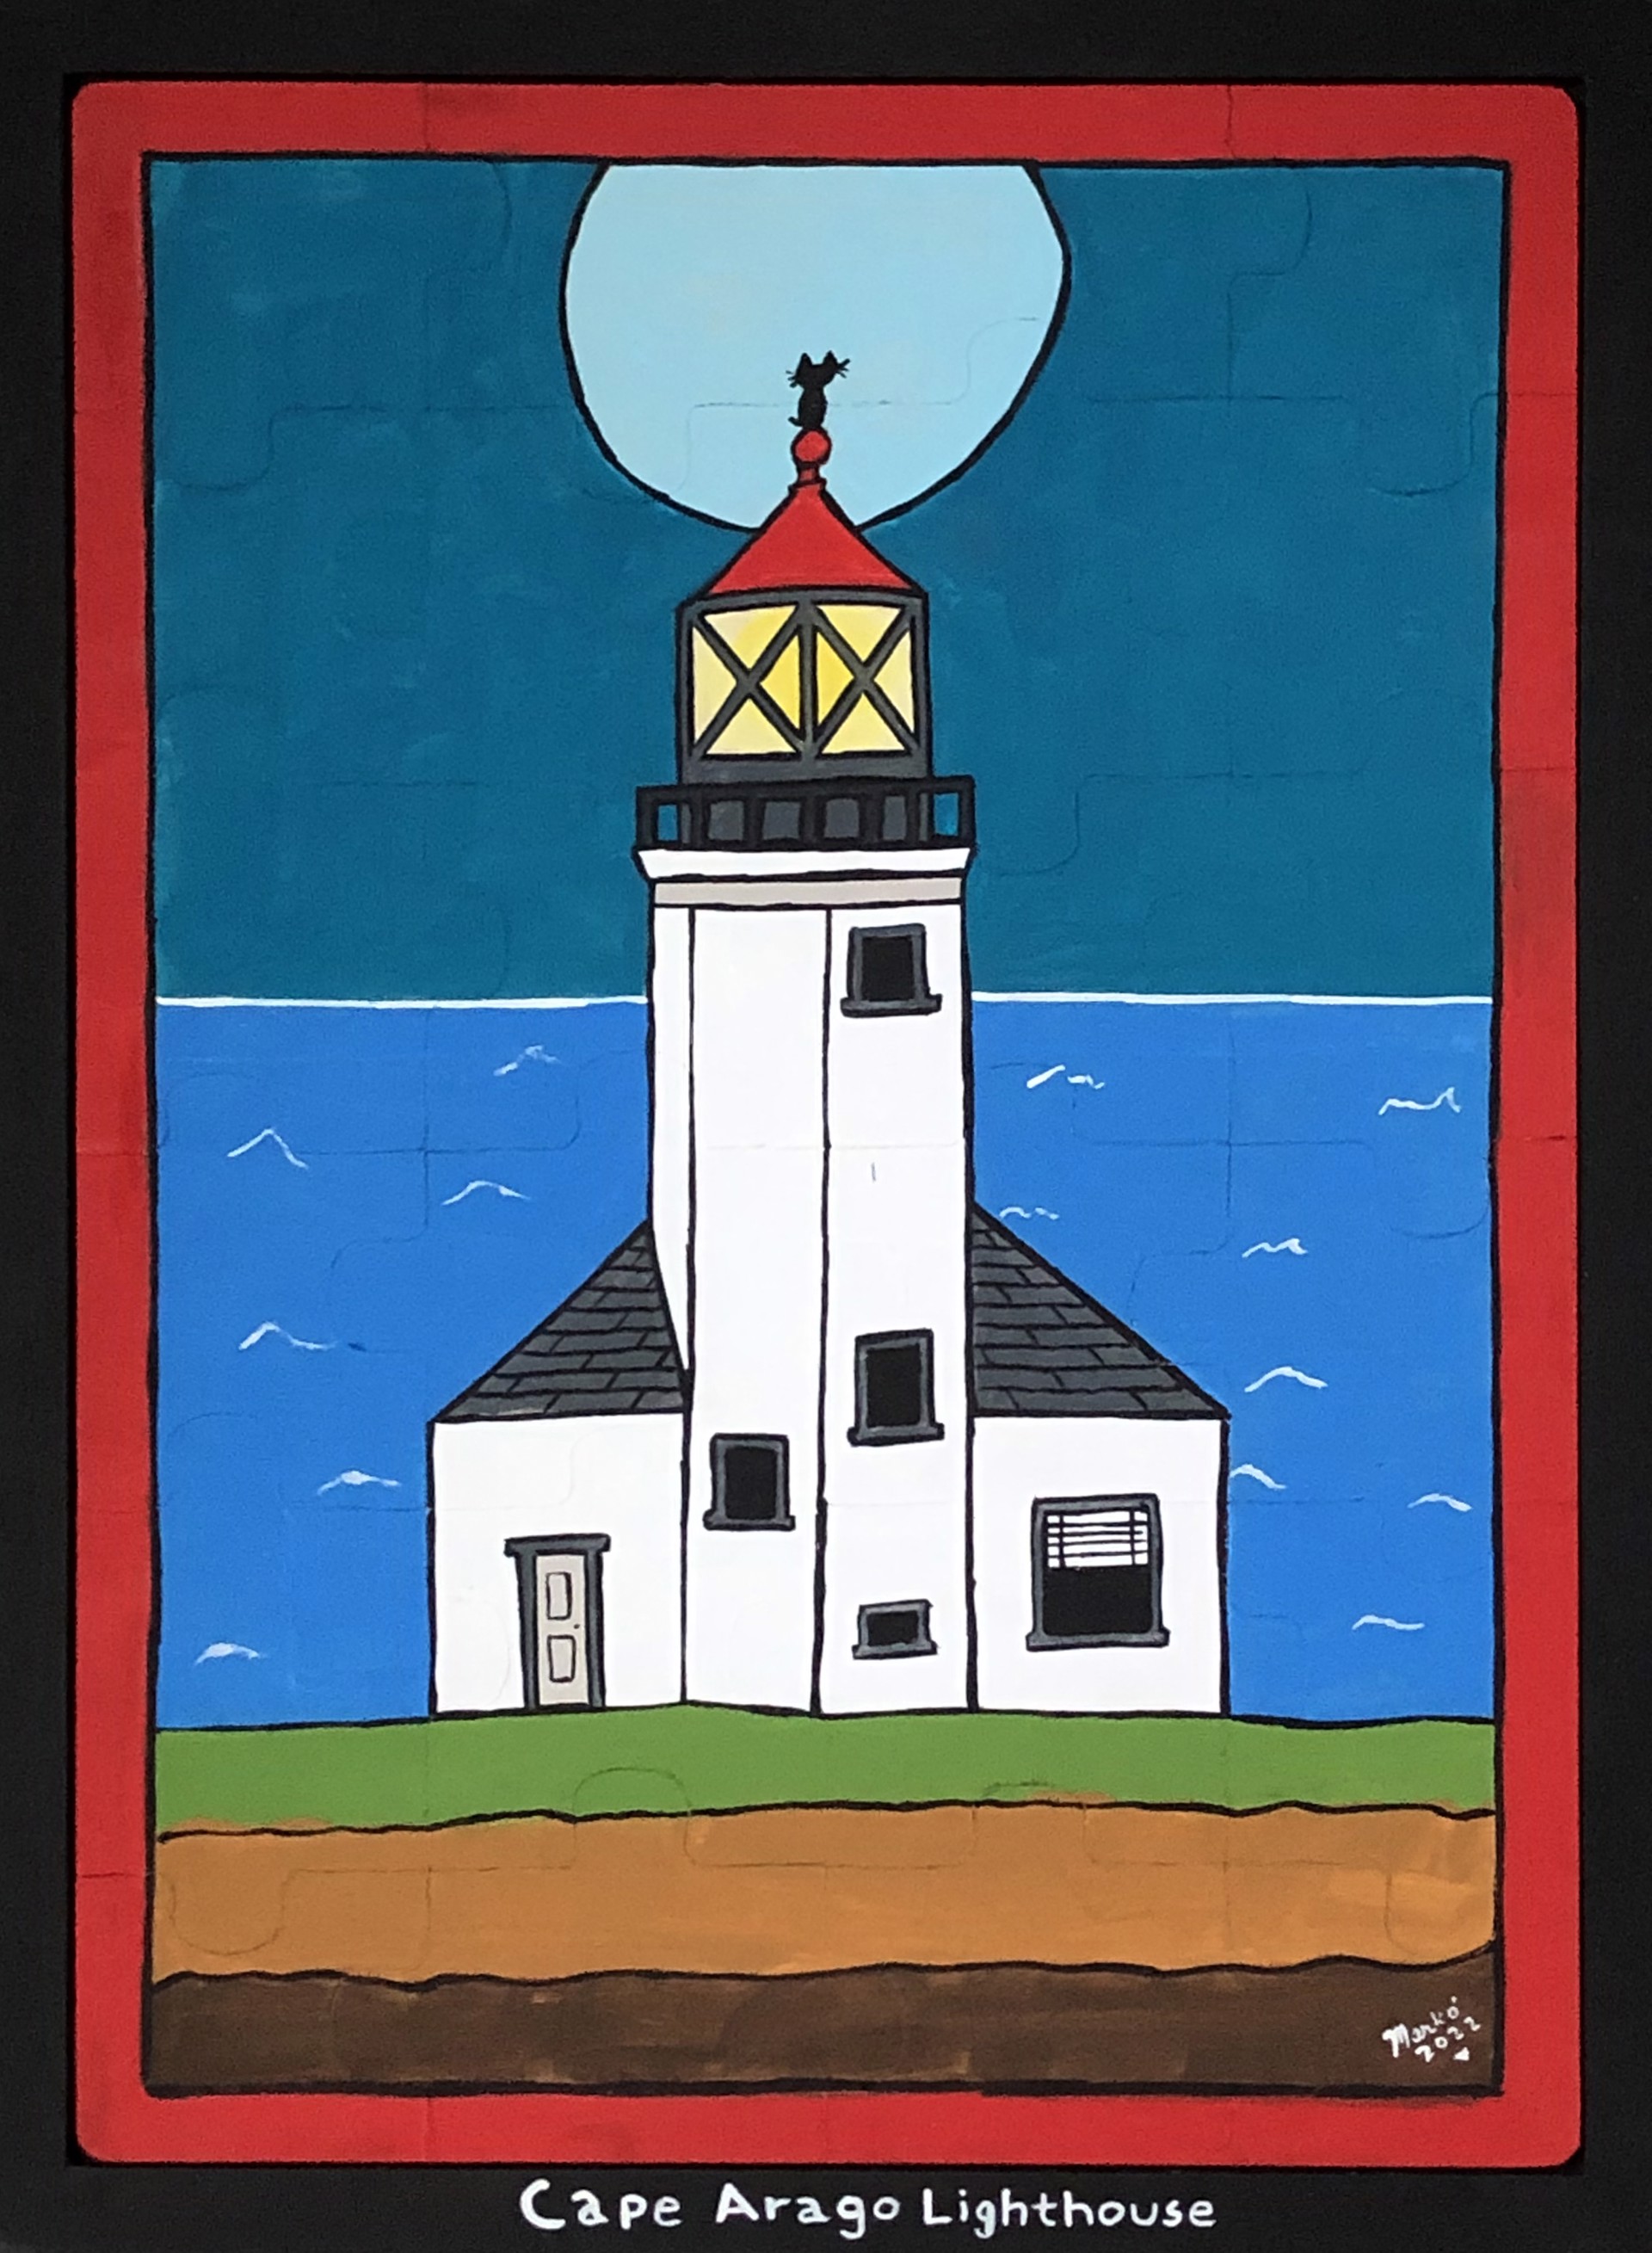 Cape Arago Lighthouse by Mark O'Malley